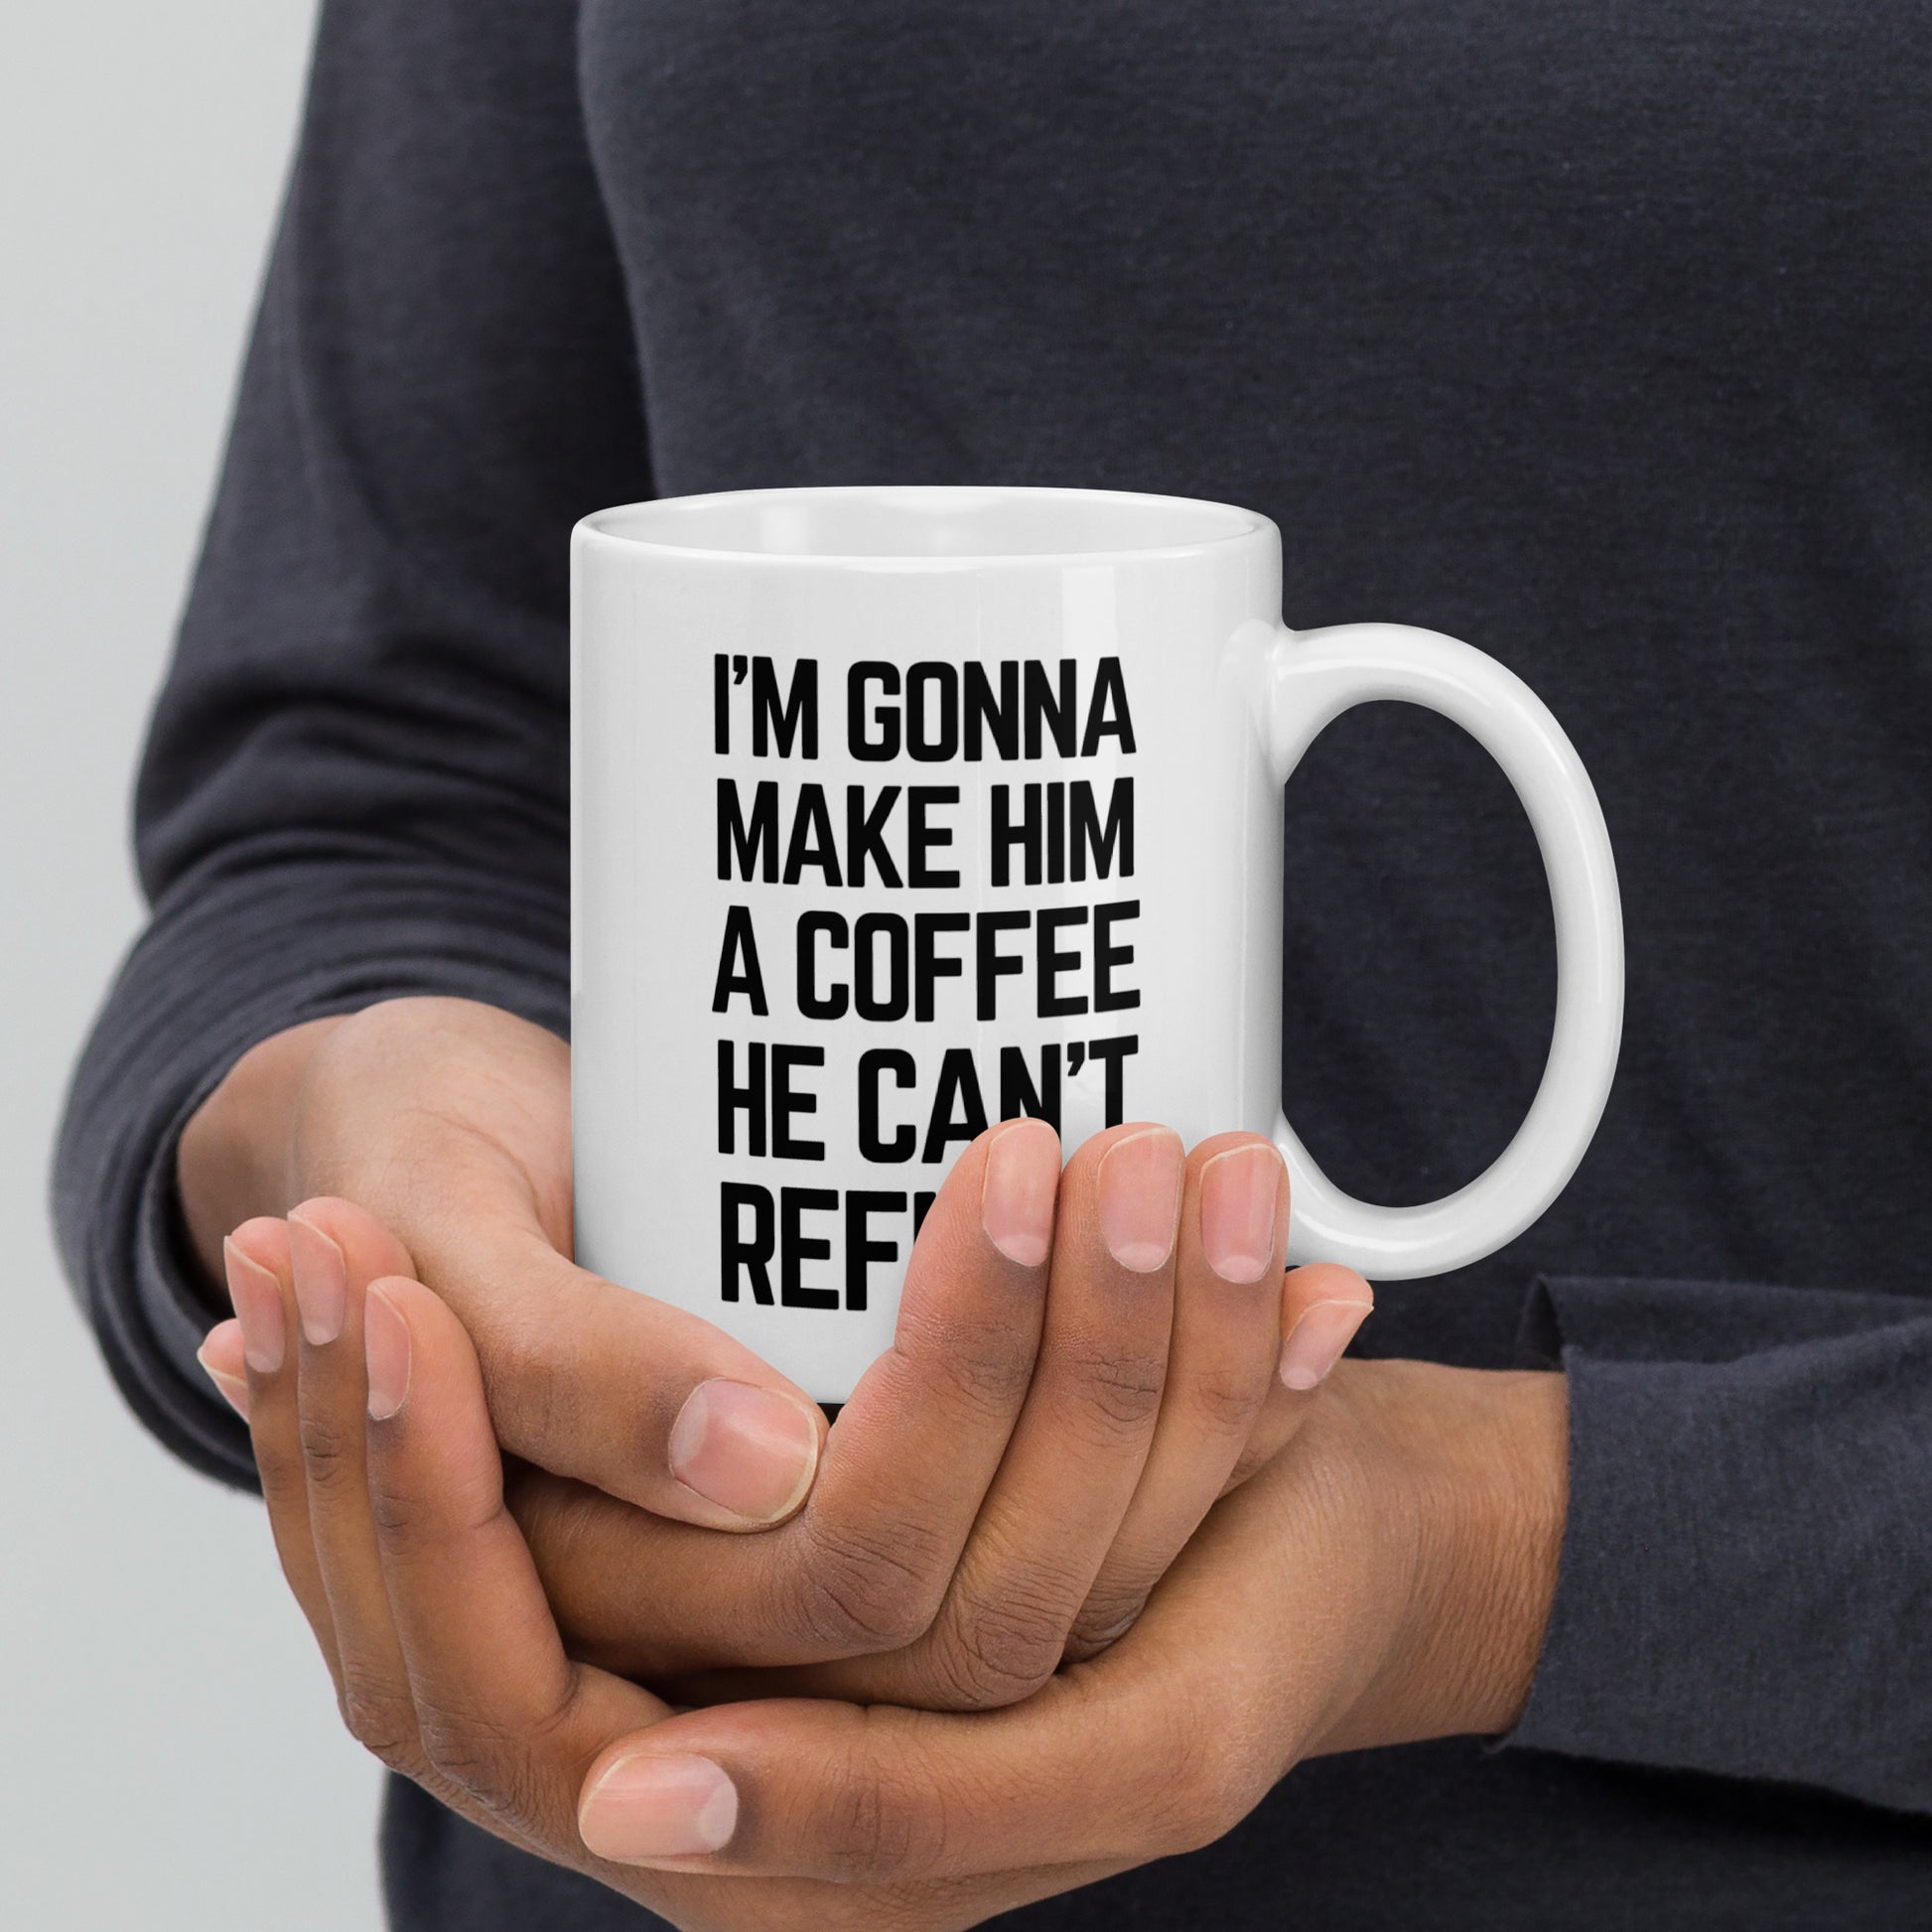 I'm gonna Make Him A Coffee He Can't Refuse - Ceramic Coffee Mug Printify